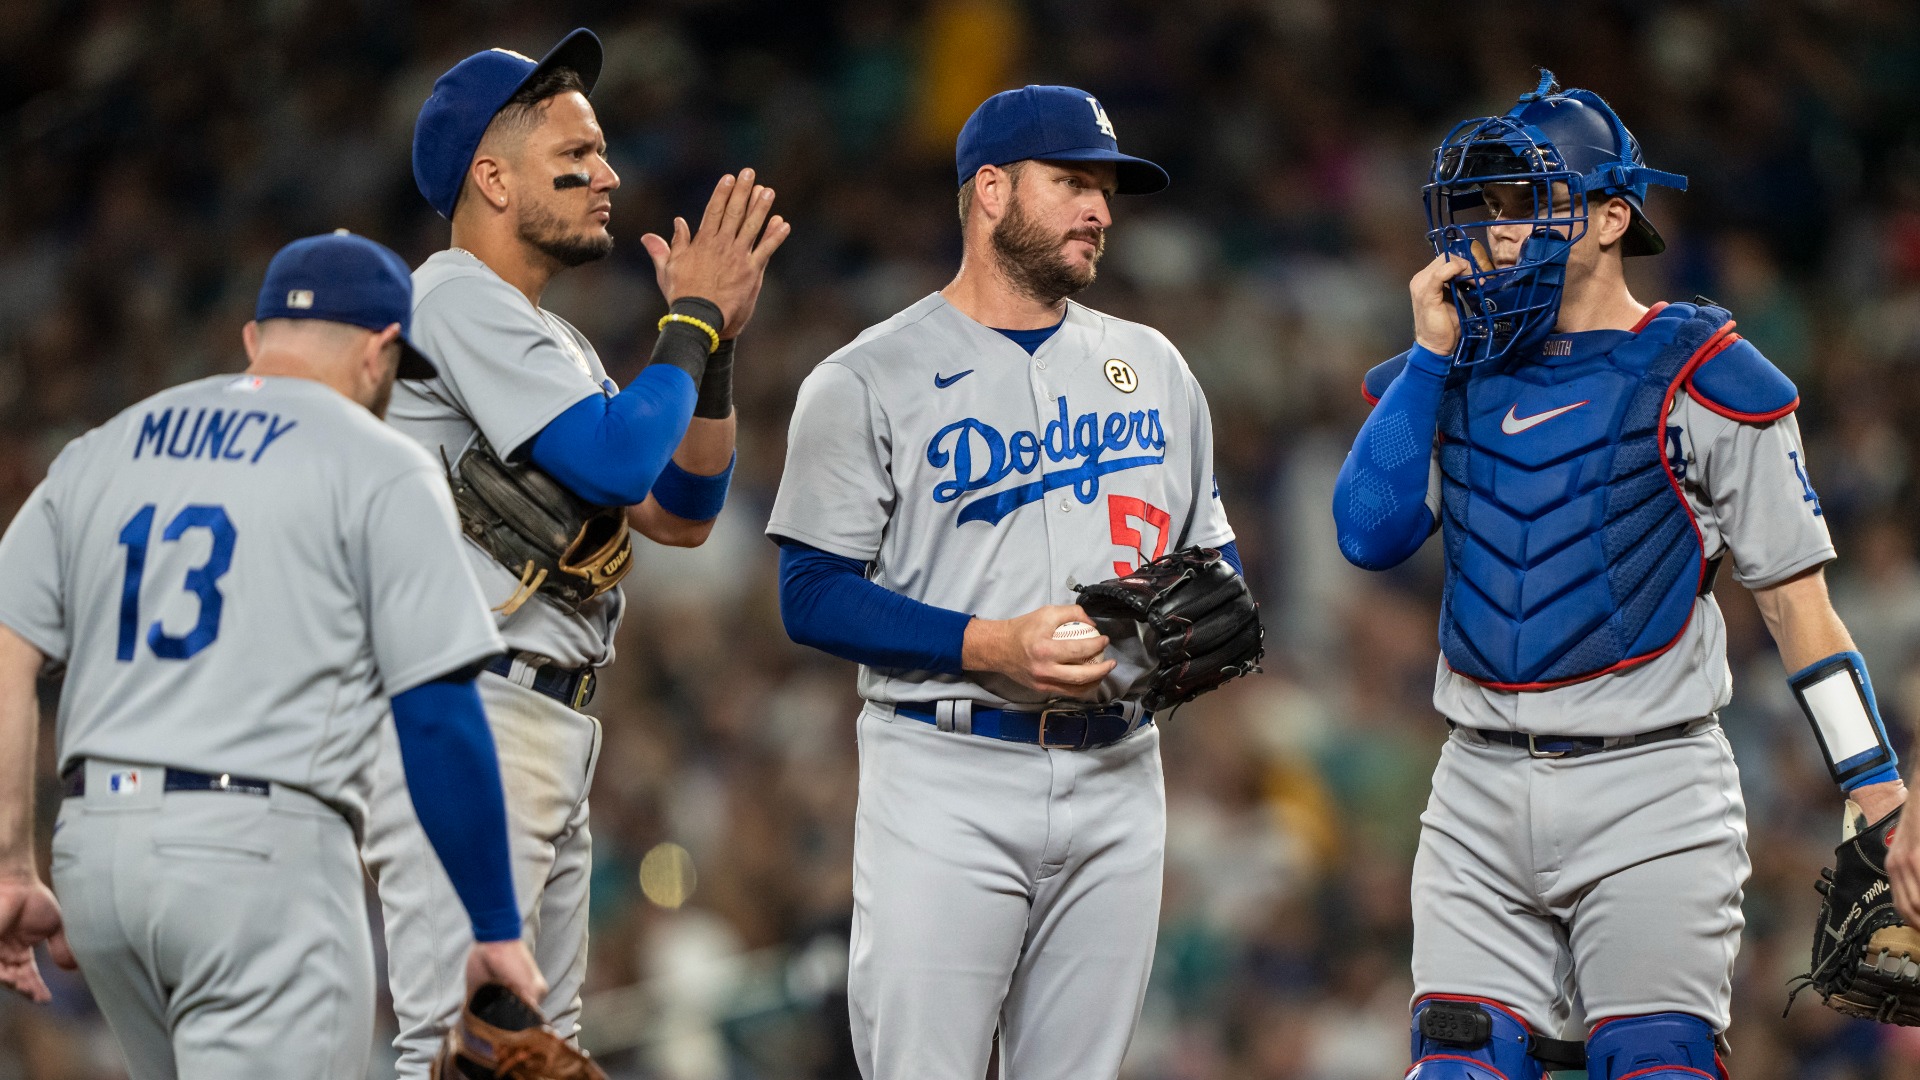 Dodgers bring back reliever Ryan Brasier on 2-year, $9 million